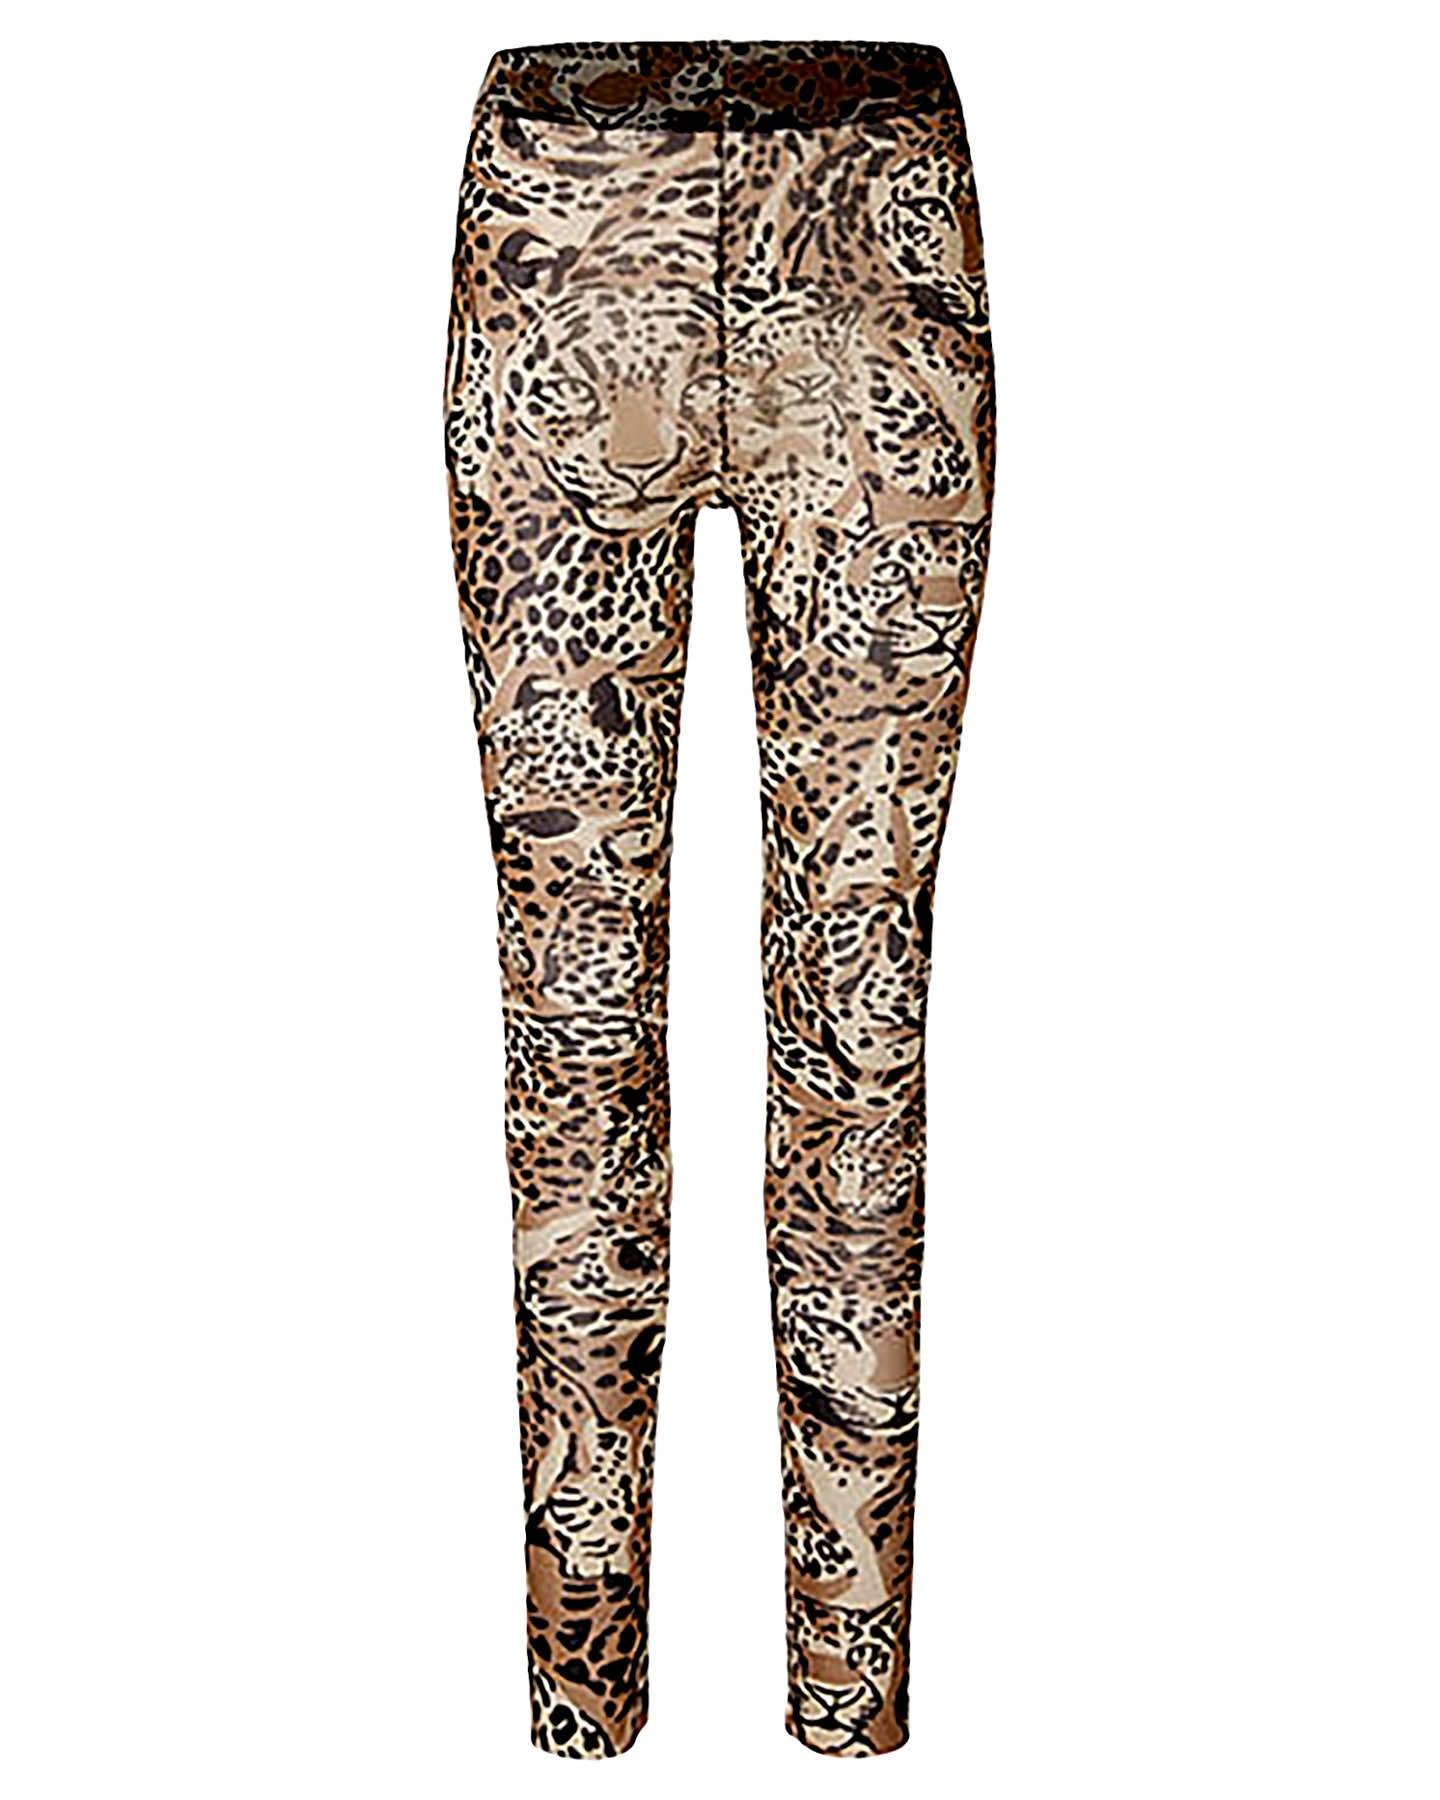 Leopard Print Leggings – BLU'S